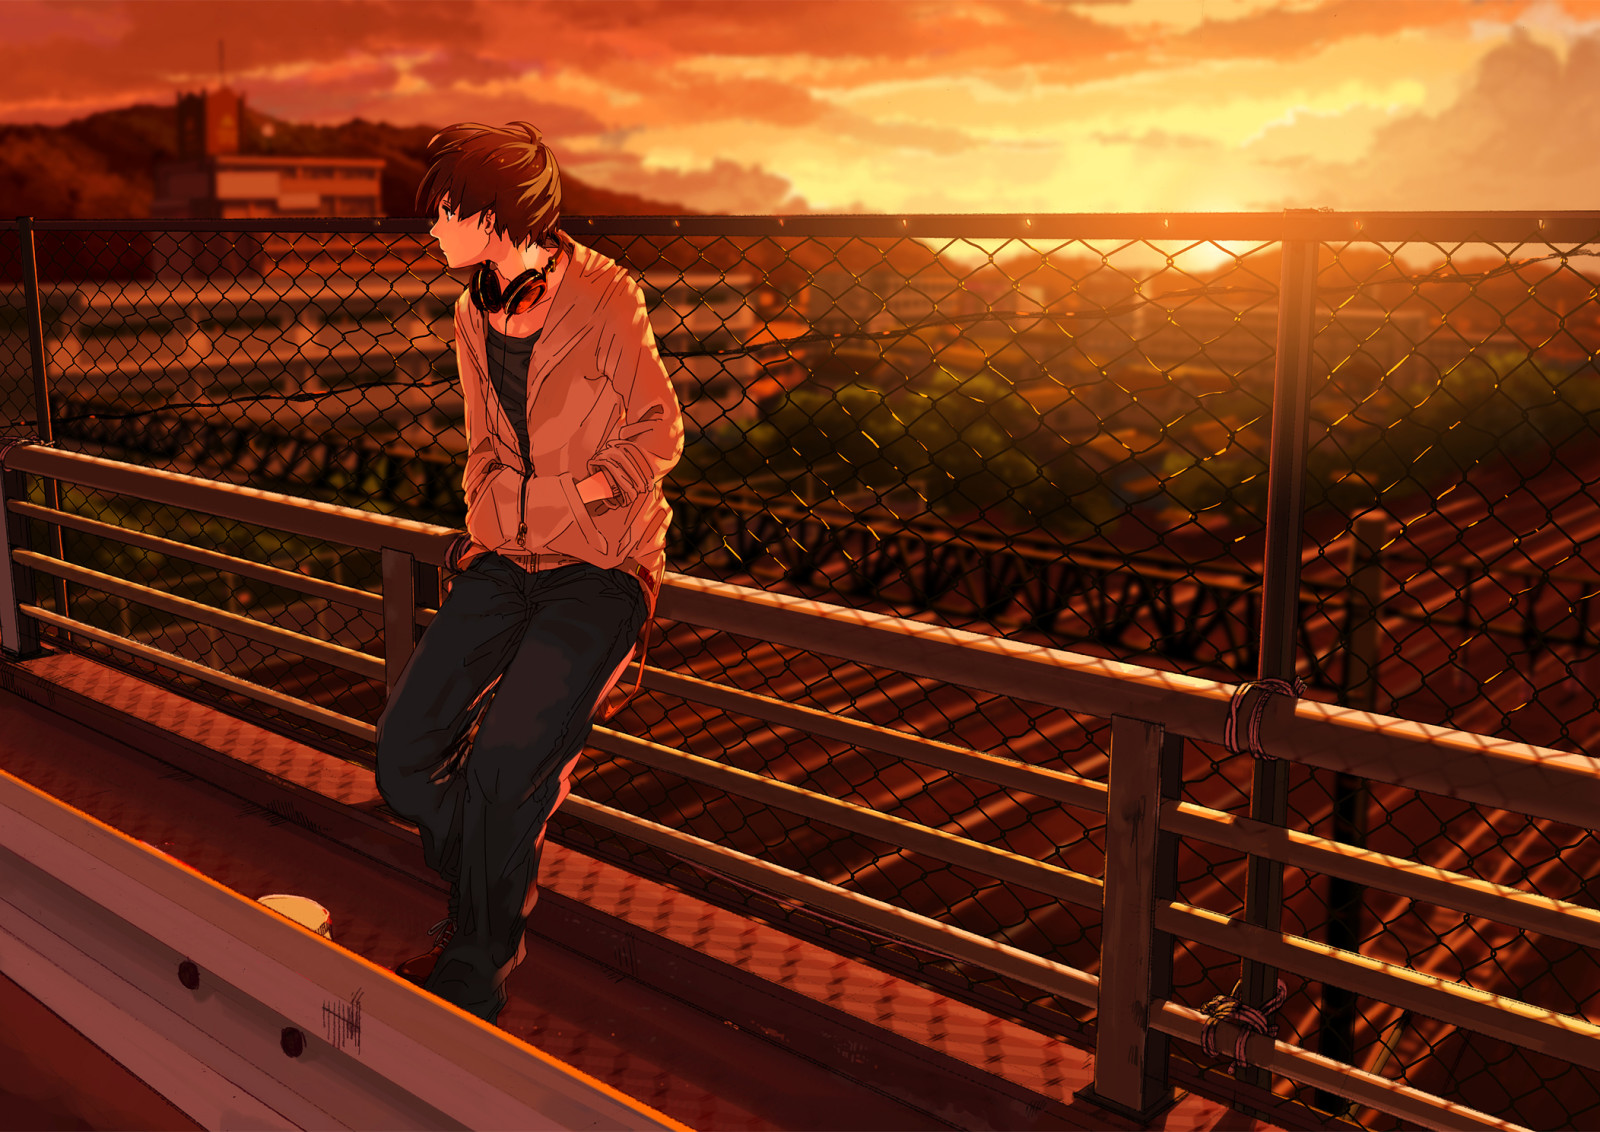 matahari terbenam, jalan, seni, Jembatan, anime, Headphone, pagar, orang